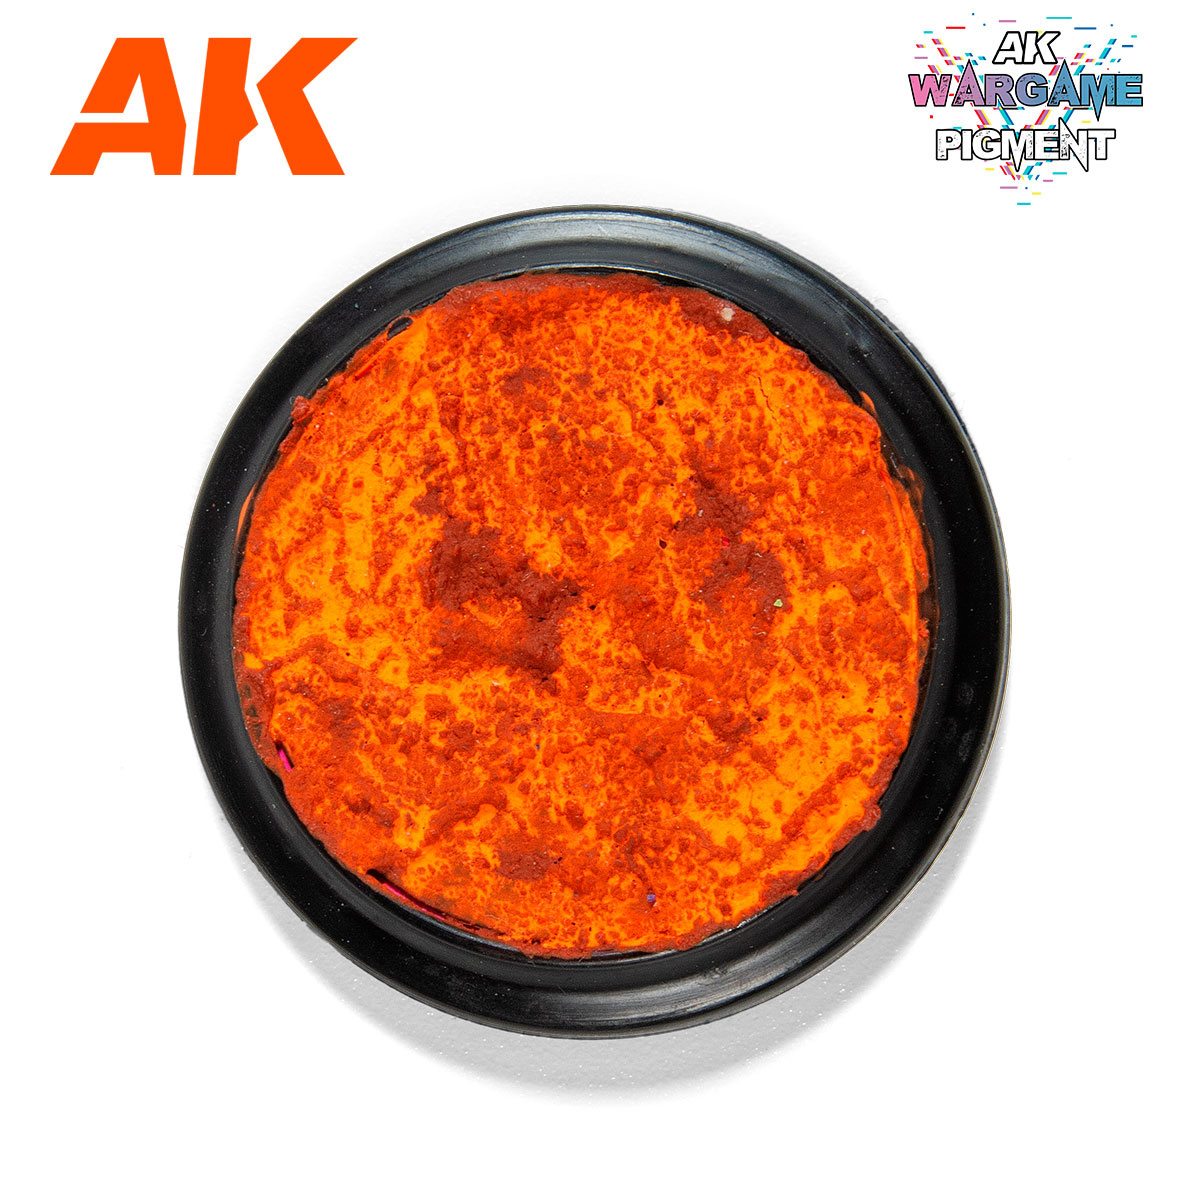 AK-Interactive Orange Fluor - Wargame Liquid Pigment - 35ml - AK-Interactive - AK-1239